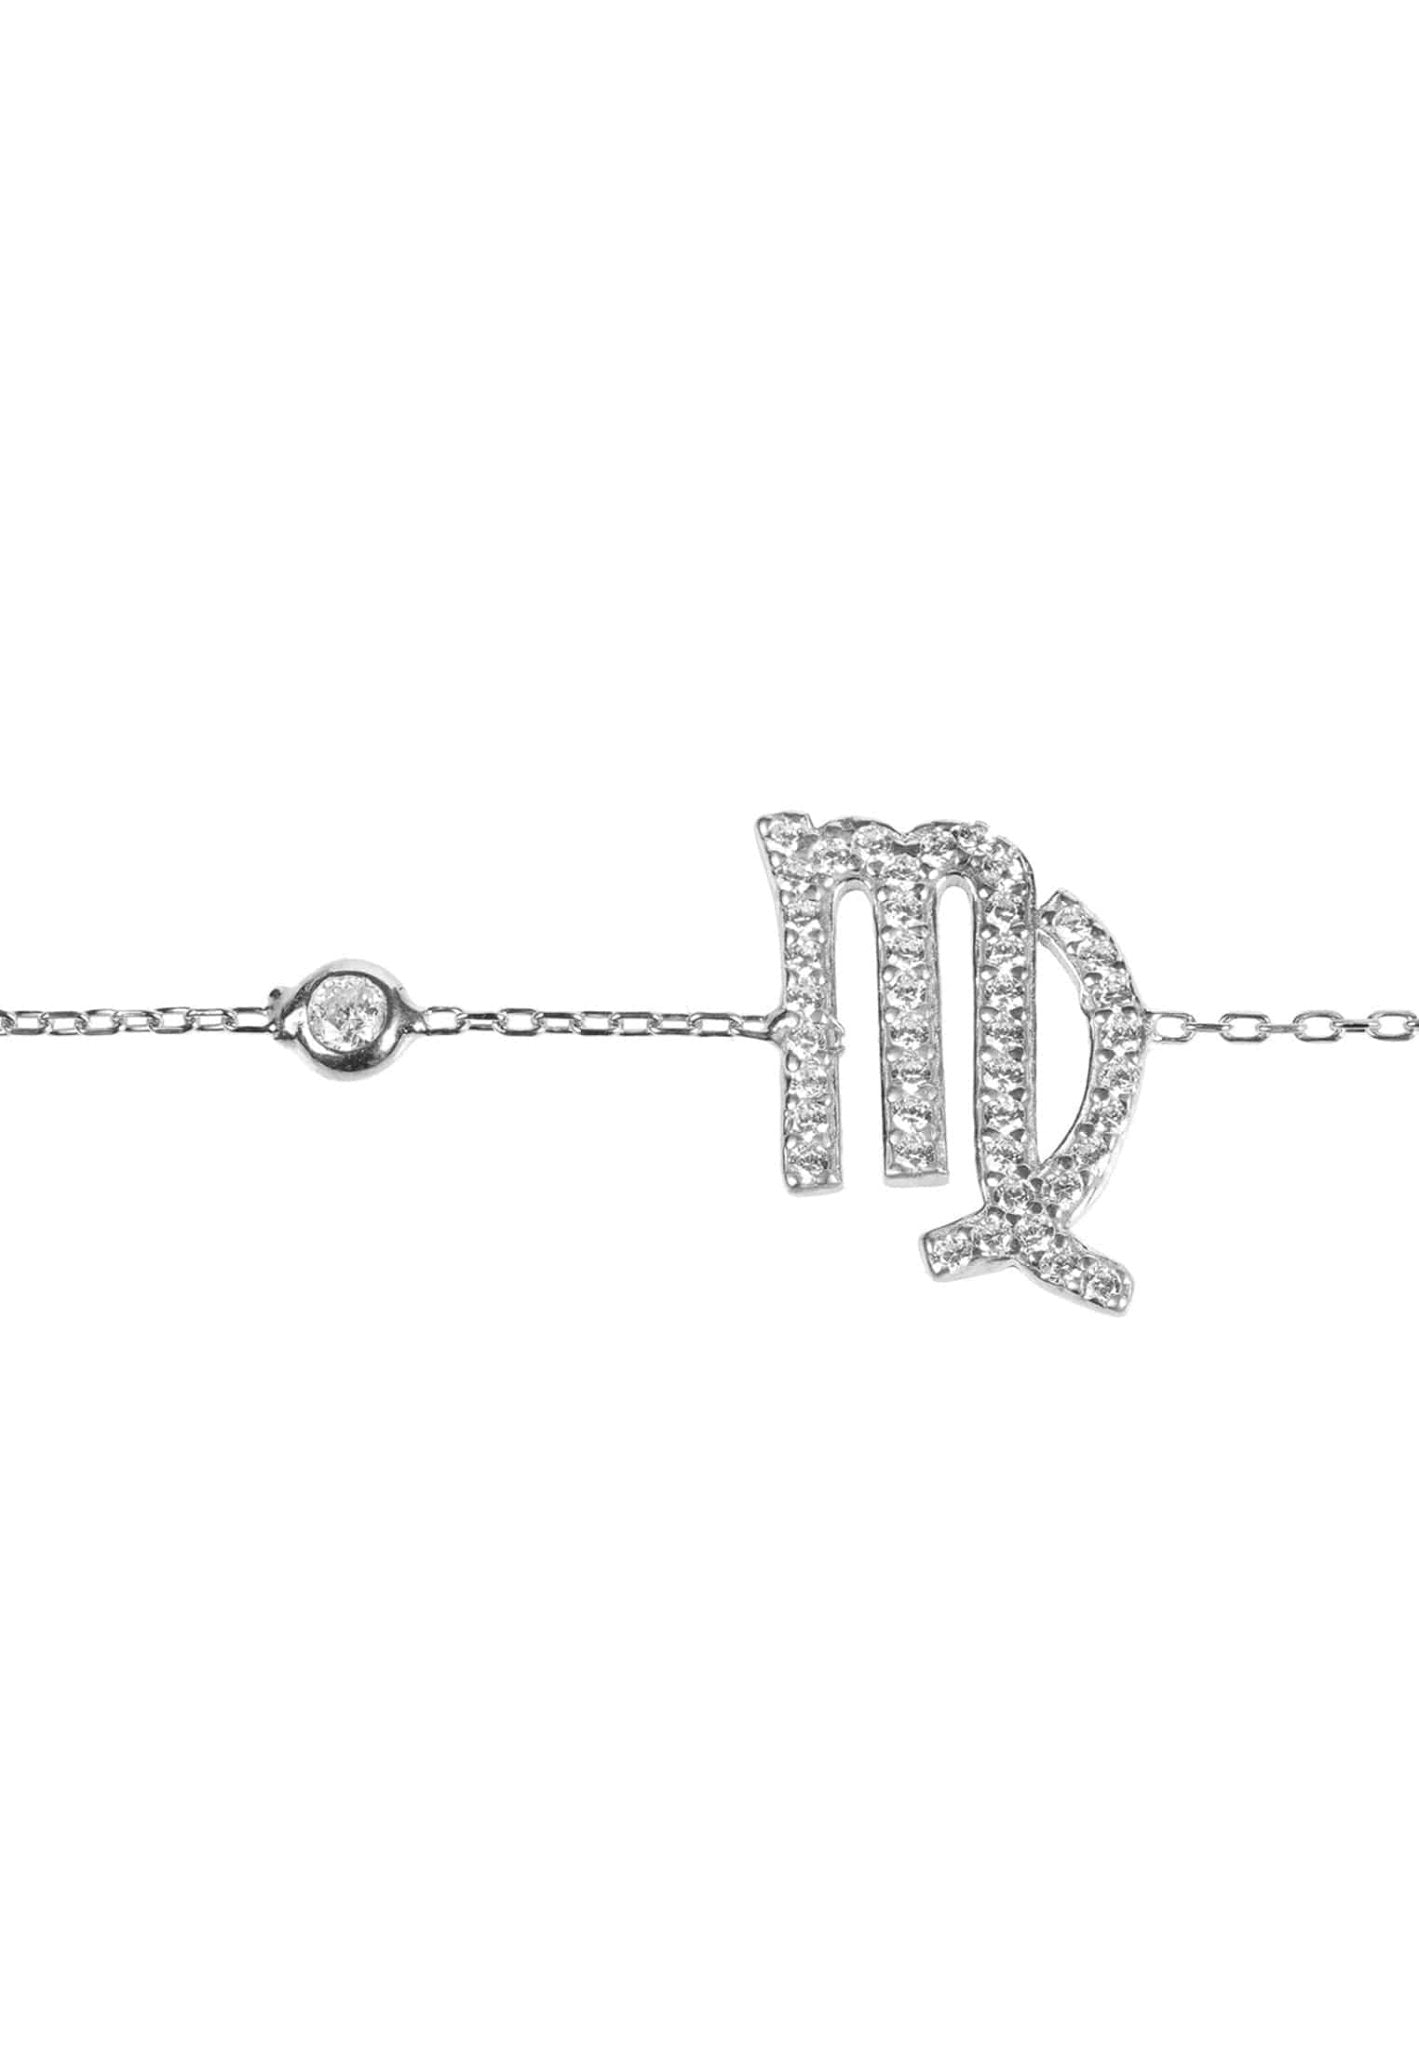 Zodiac Horoscope Star Sign Bracelet Virgo - LATELITA Bracelets